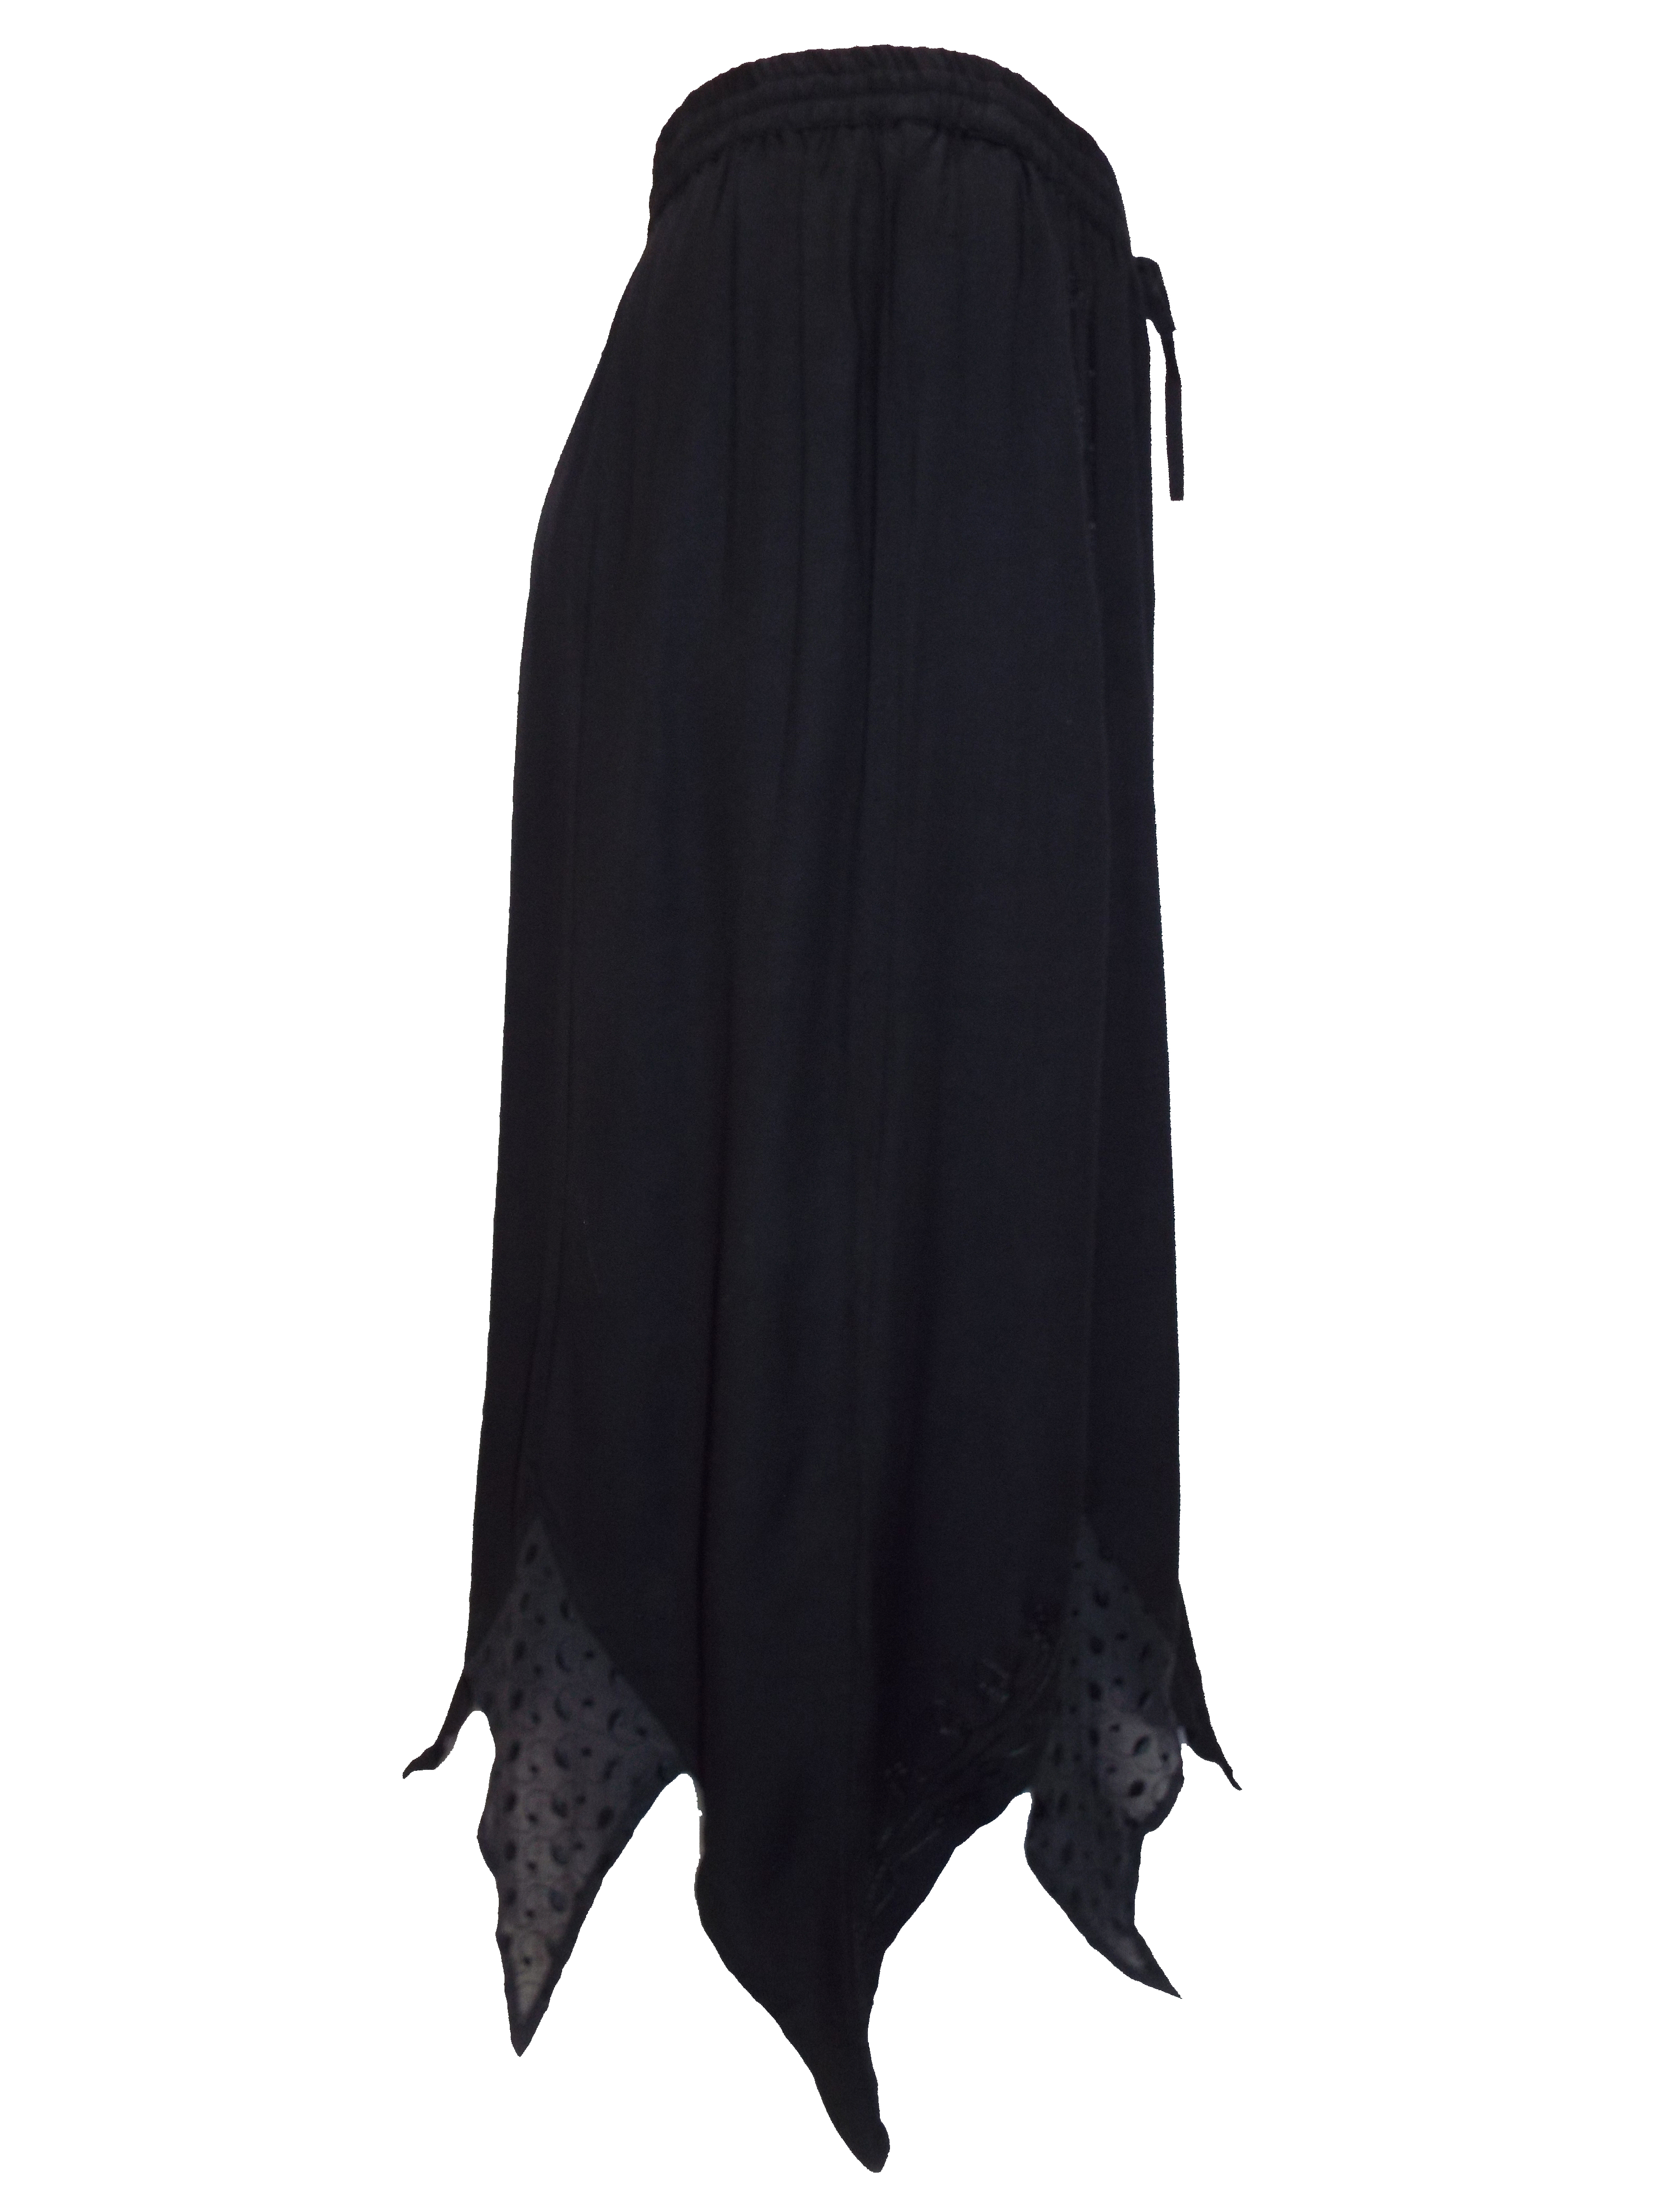 eaonplus BLACK Renaissance Gothic Zigzag Skirt - Plus Size 18 to 32